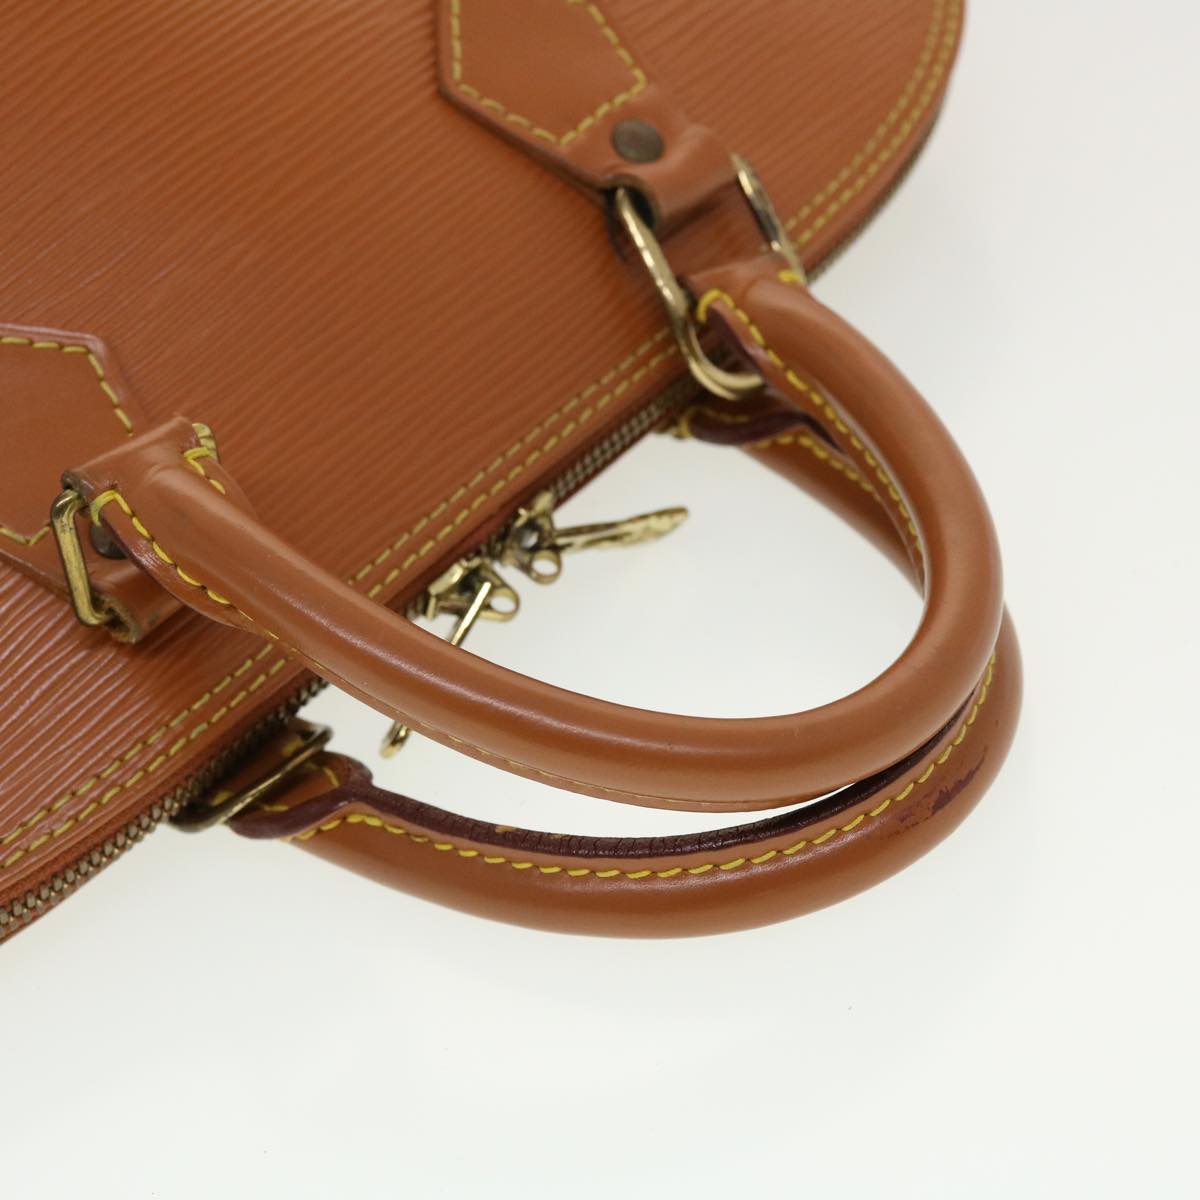 LOUIS VUITTON ALMA Epi Dark Brown Handbag Mocha No.862